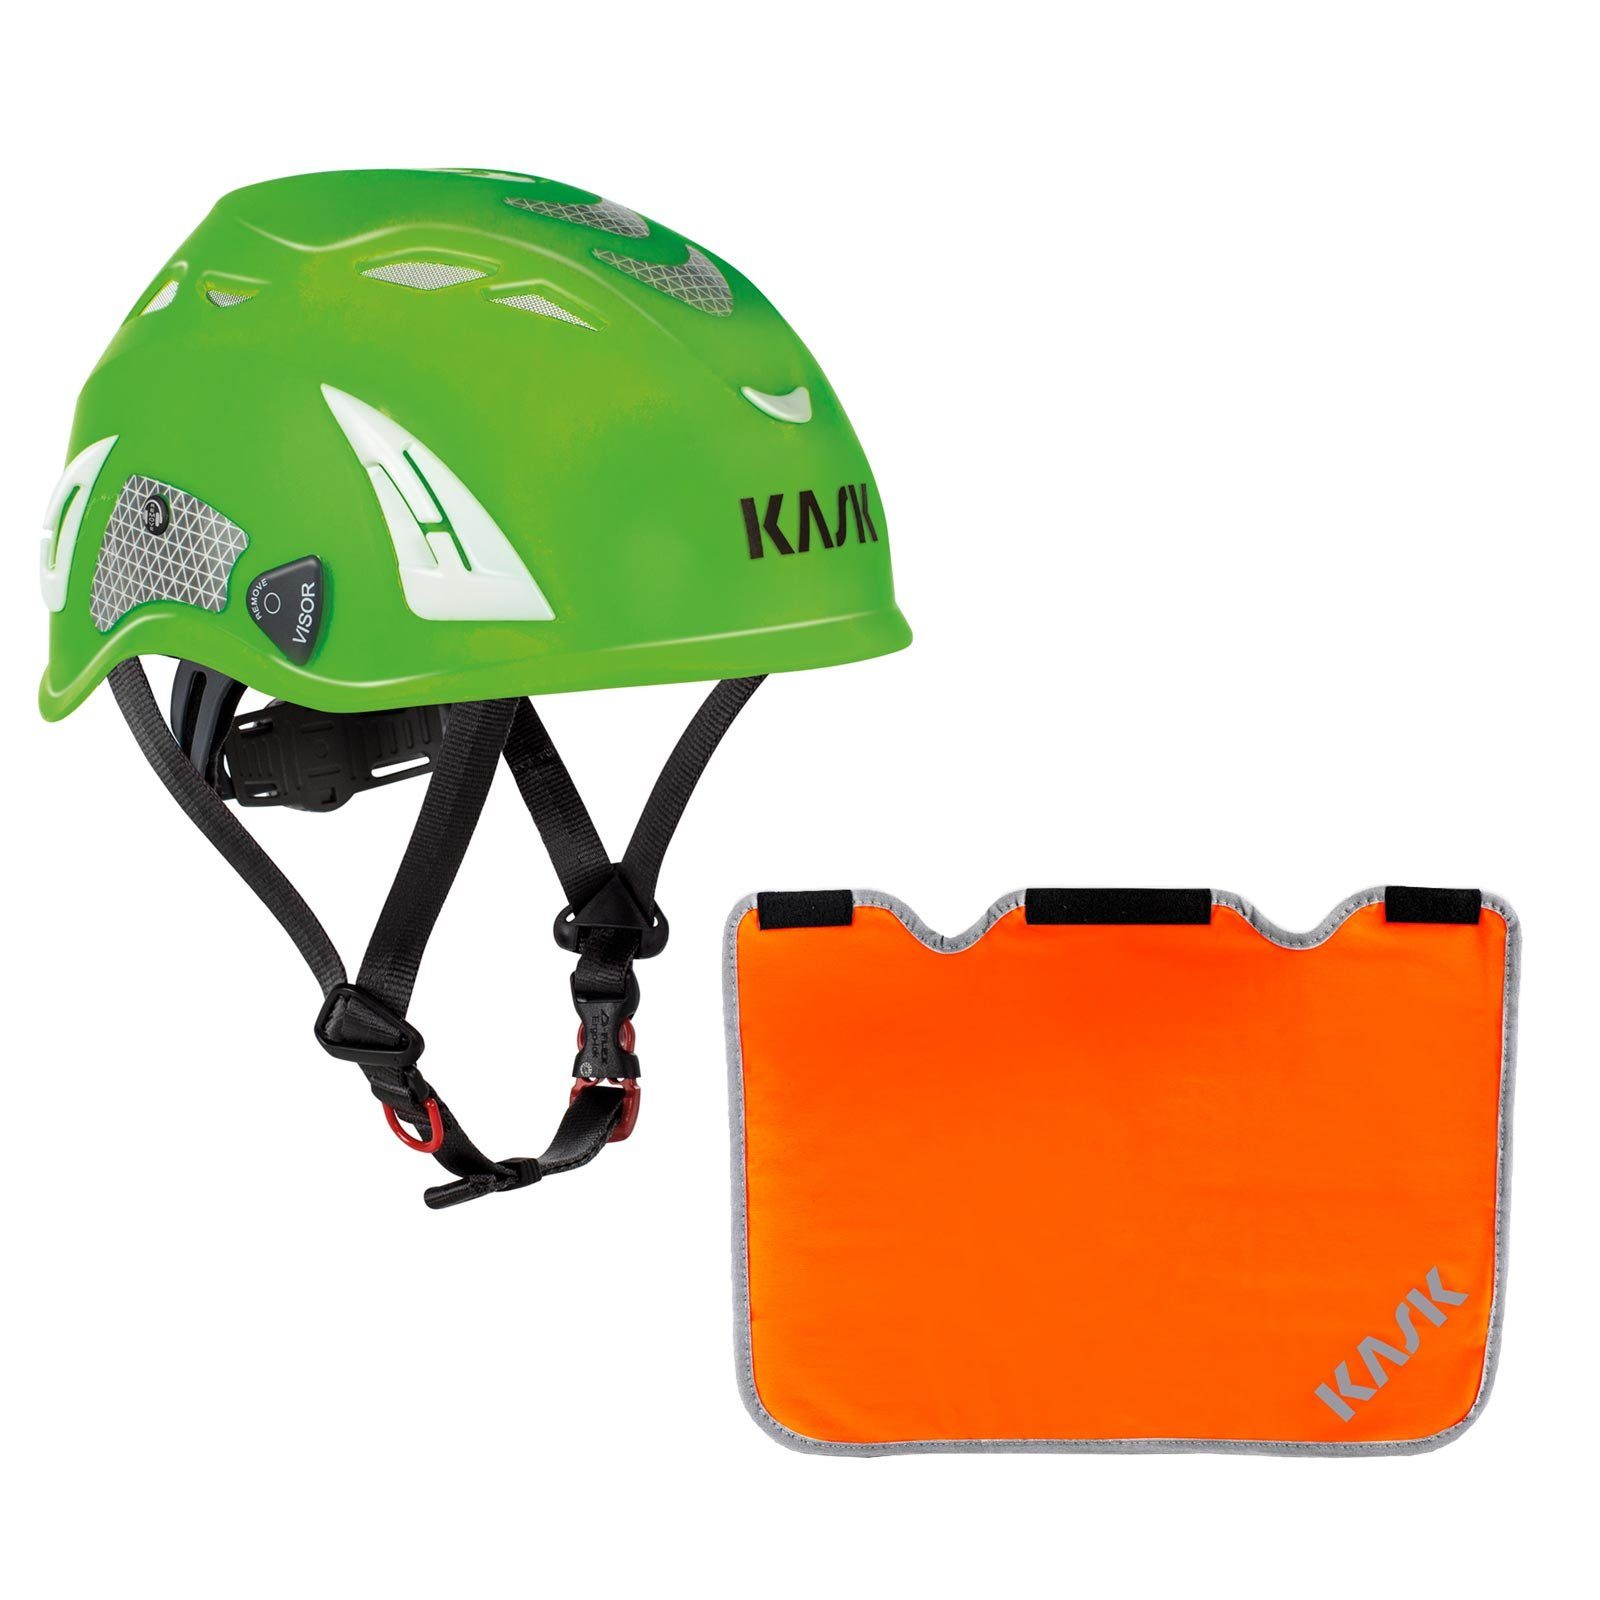 Kask Schutzhelm Plasma HI VIZ Bergsteigerhelm, Kletterhelm + Nackenschutz orange hellgrün